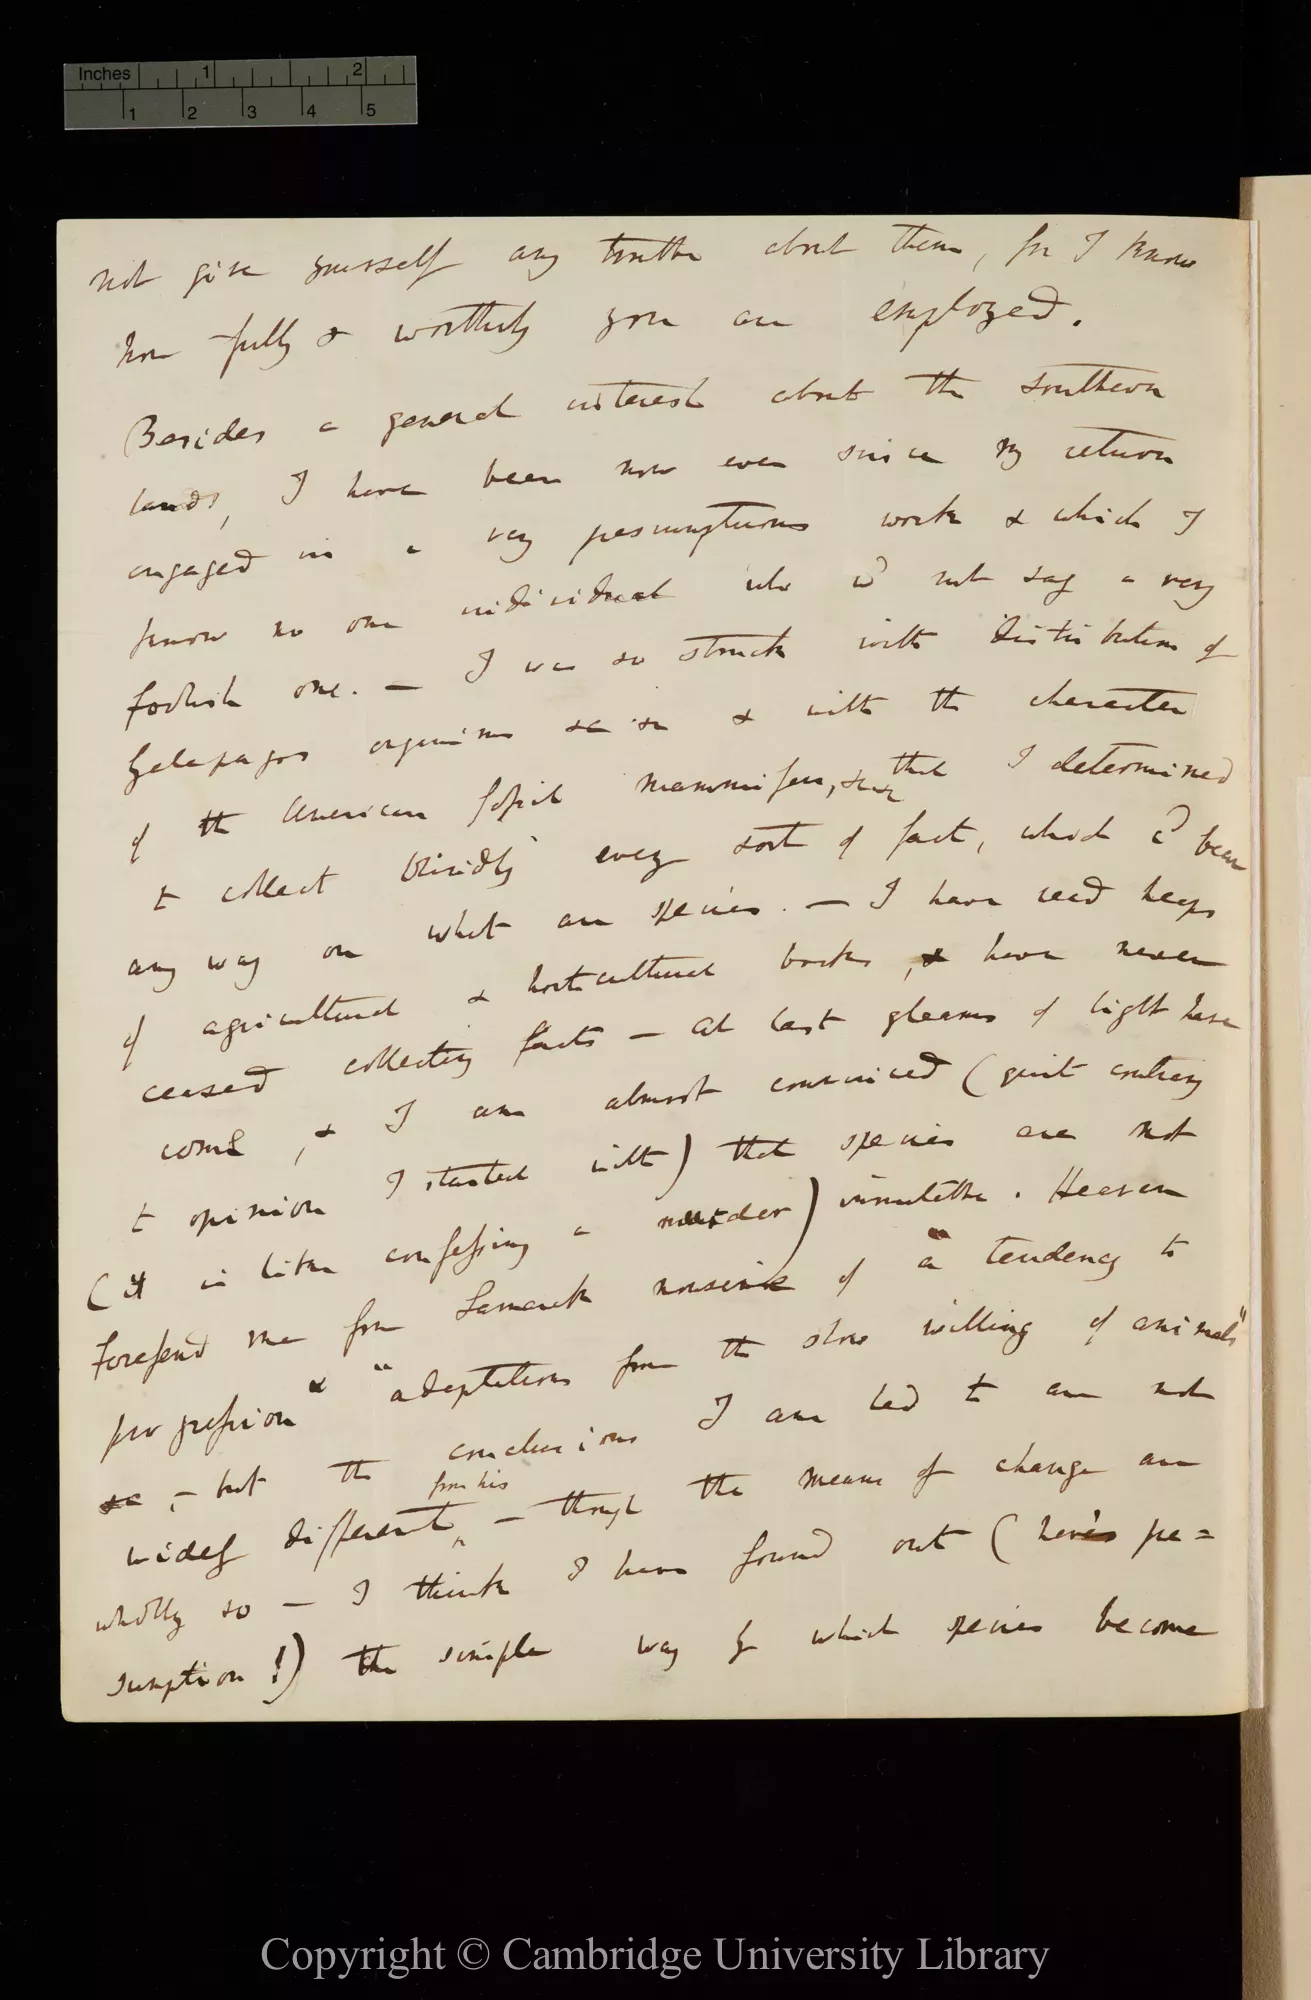 Charles Darwin's letter to Joseph Hooker regarding his theory of evolution